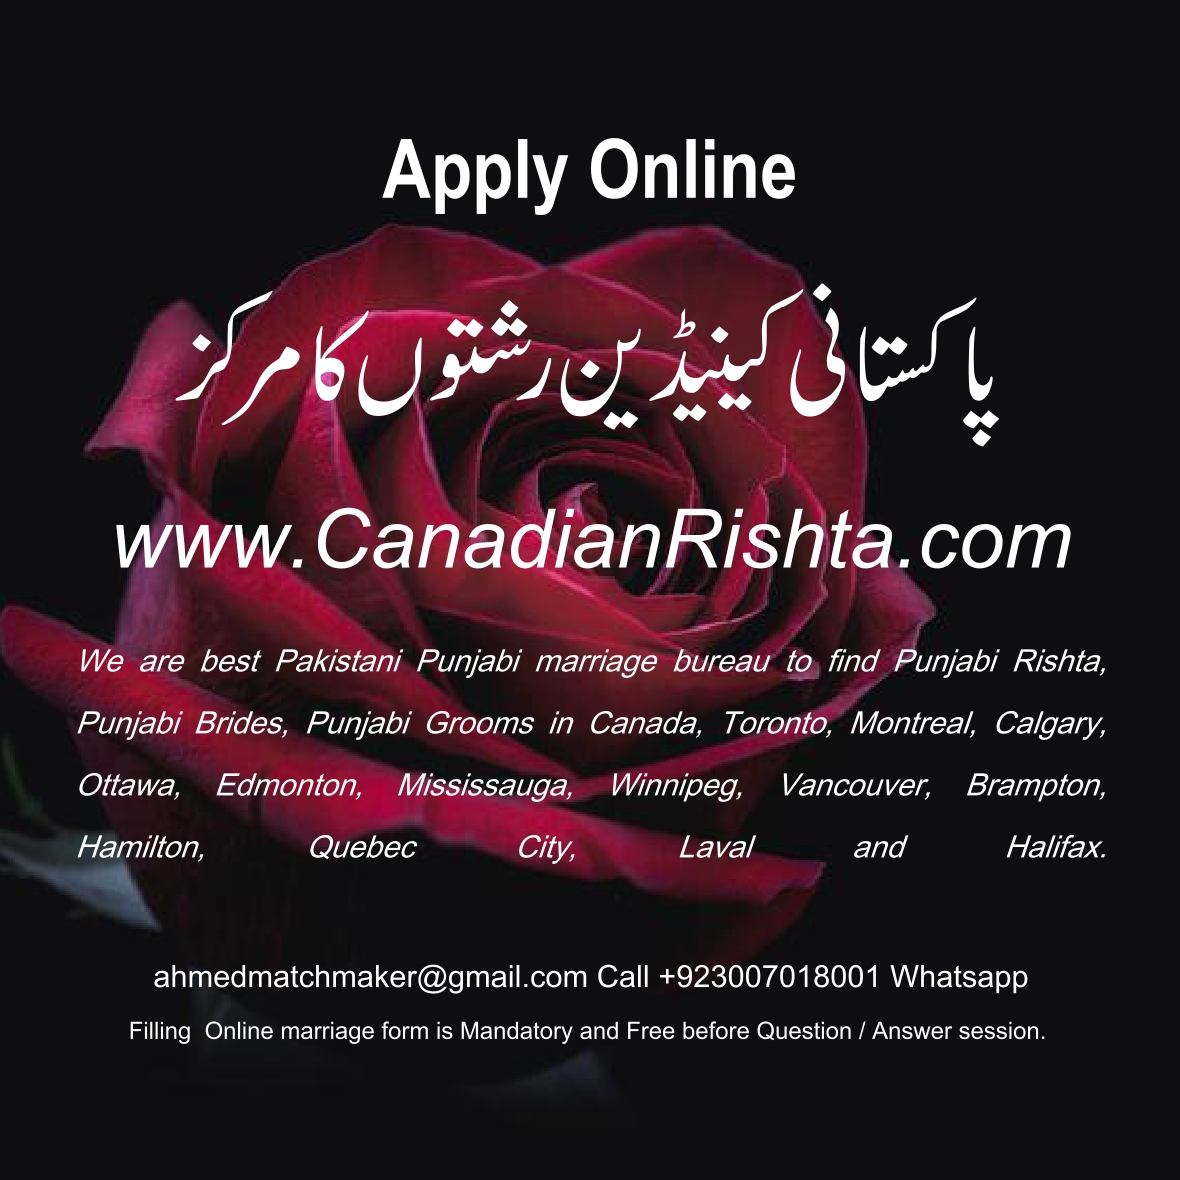 Pakistani-rishta-shaadi-marriage-bureau-Canada-Toronto-Montreal-Calgary-Ottawa-Vancouver-Brampton-Hamilton-Quebec-6.jpg